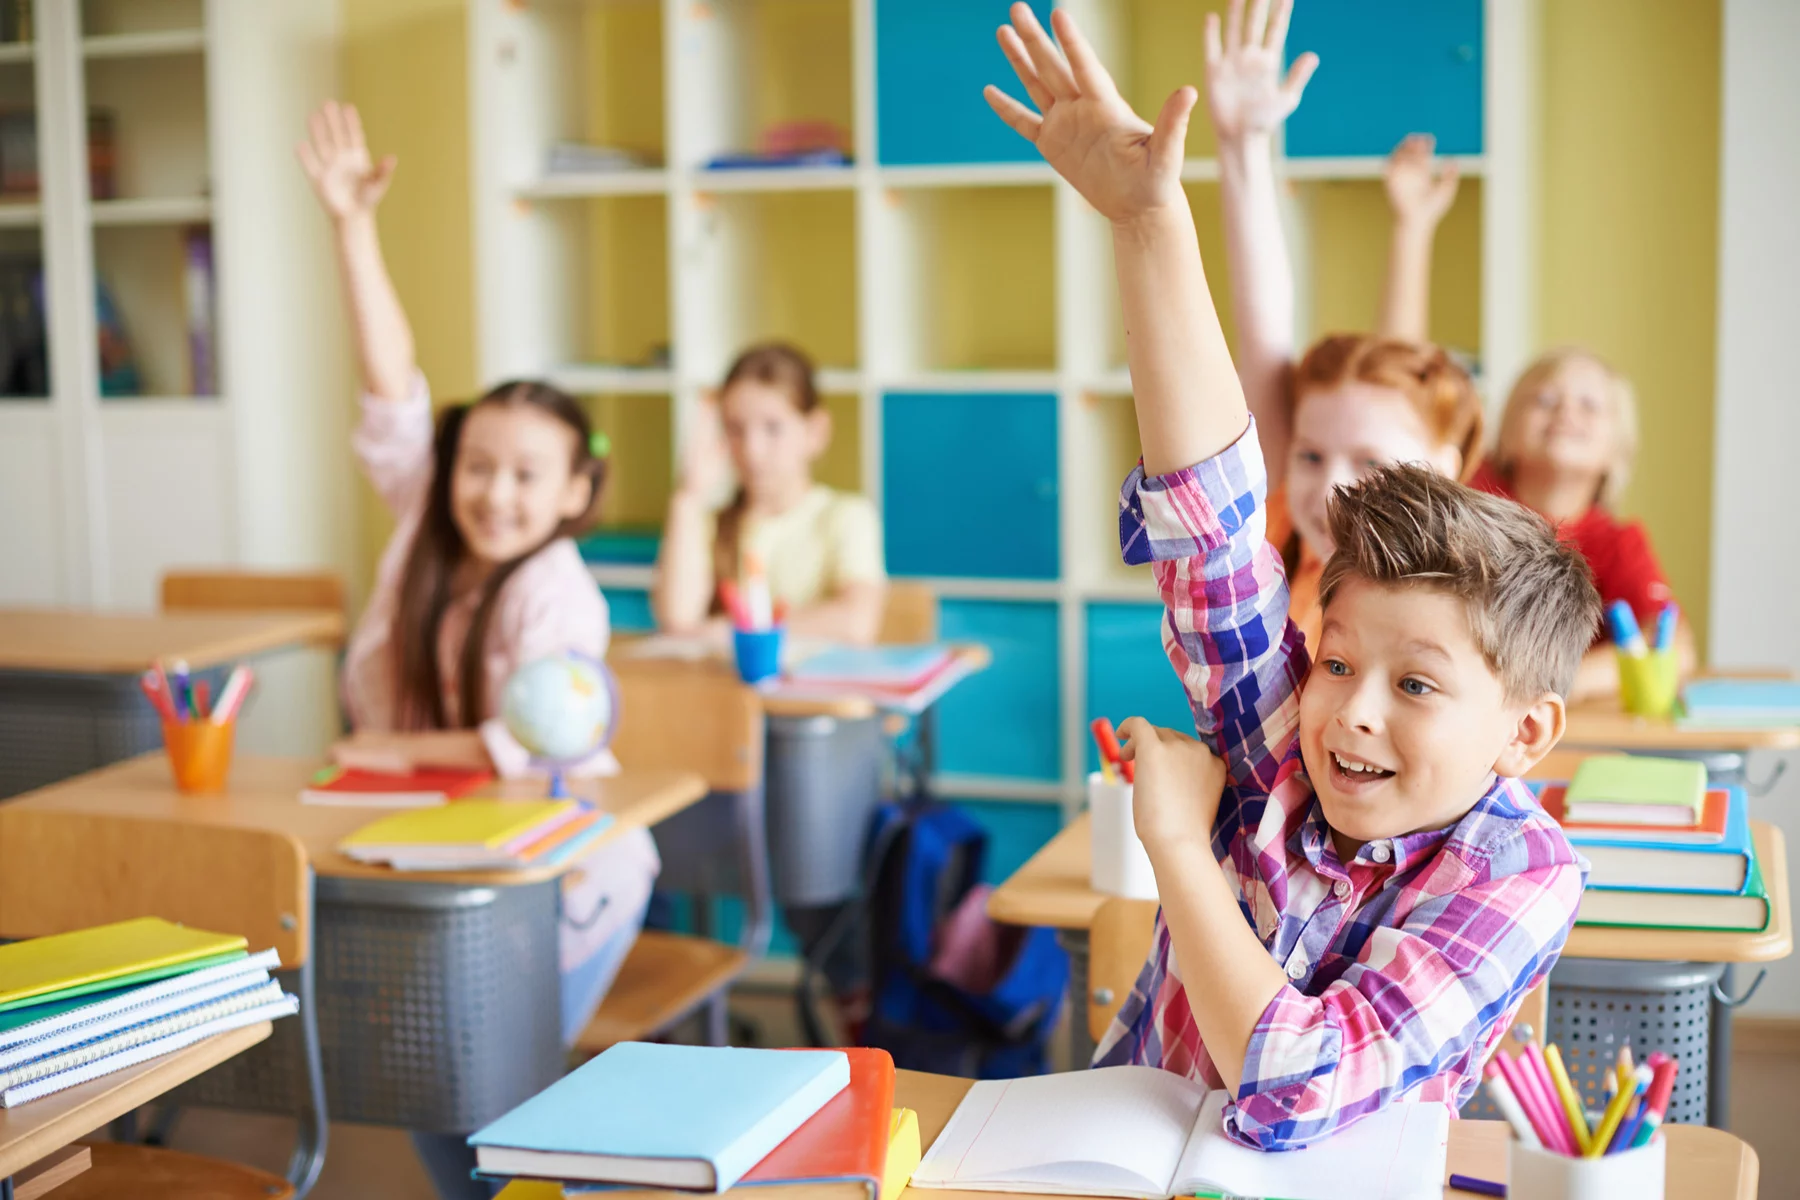 Schoolchildren raising their hands in class